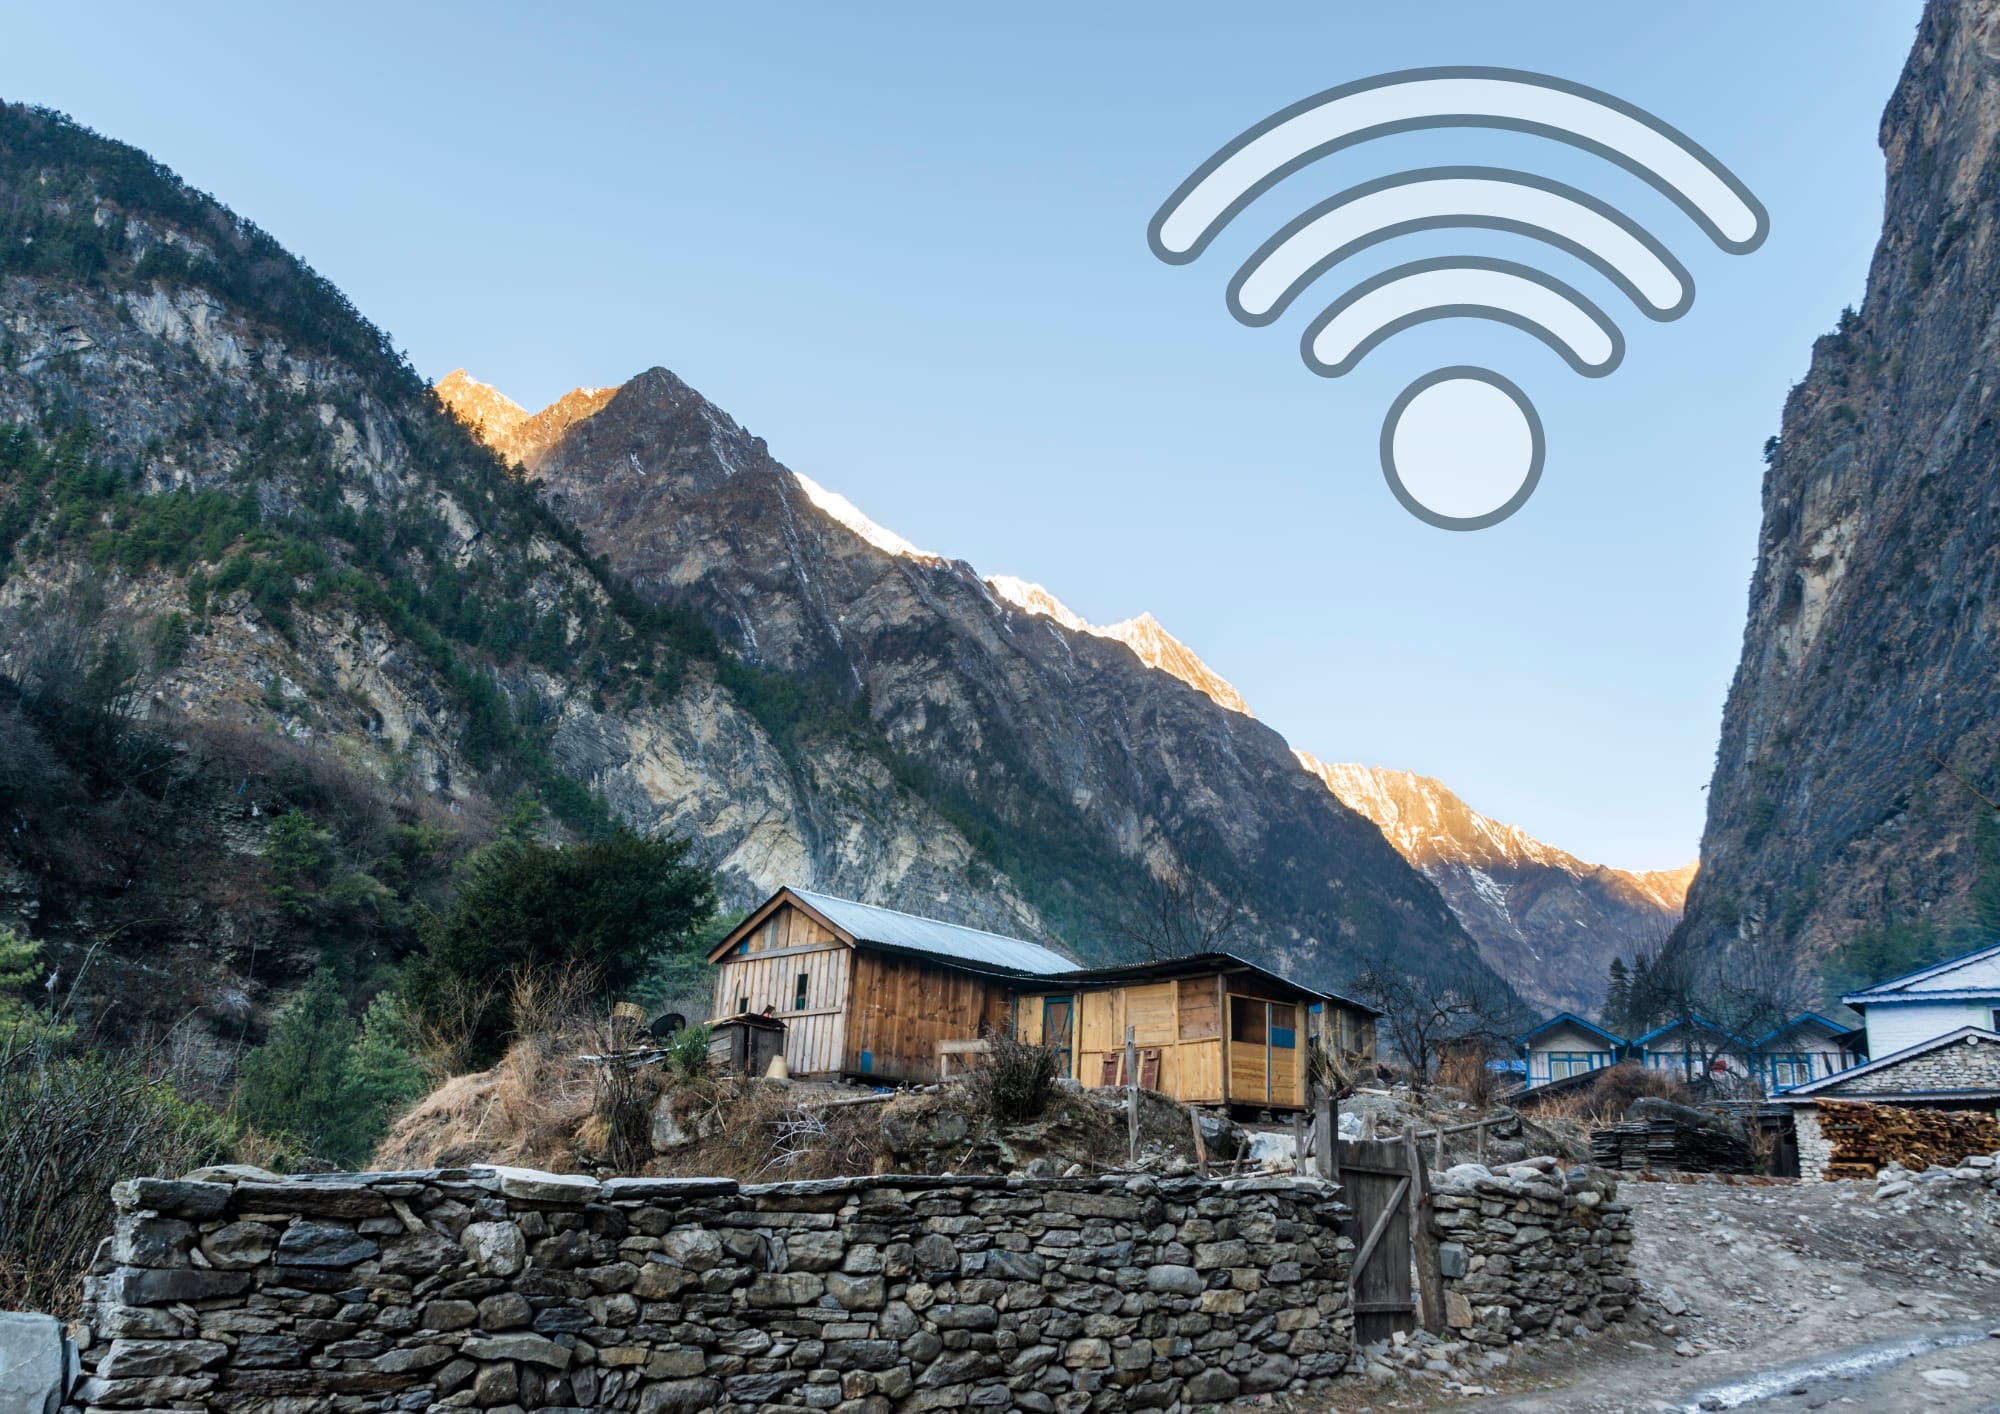 Internet availability on the Annapurna Circuit Trekking